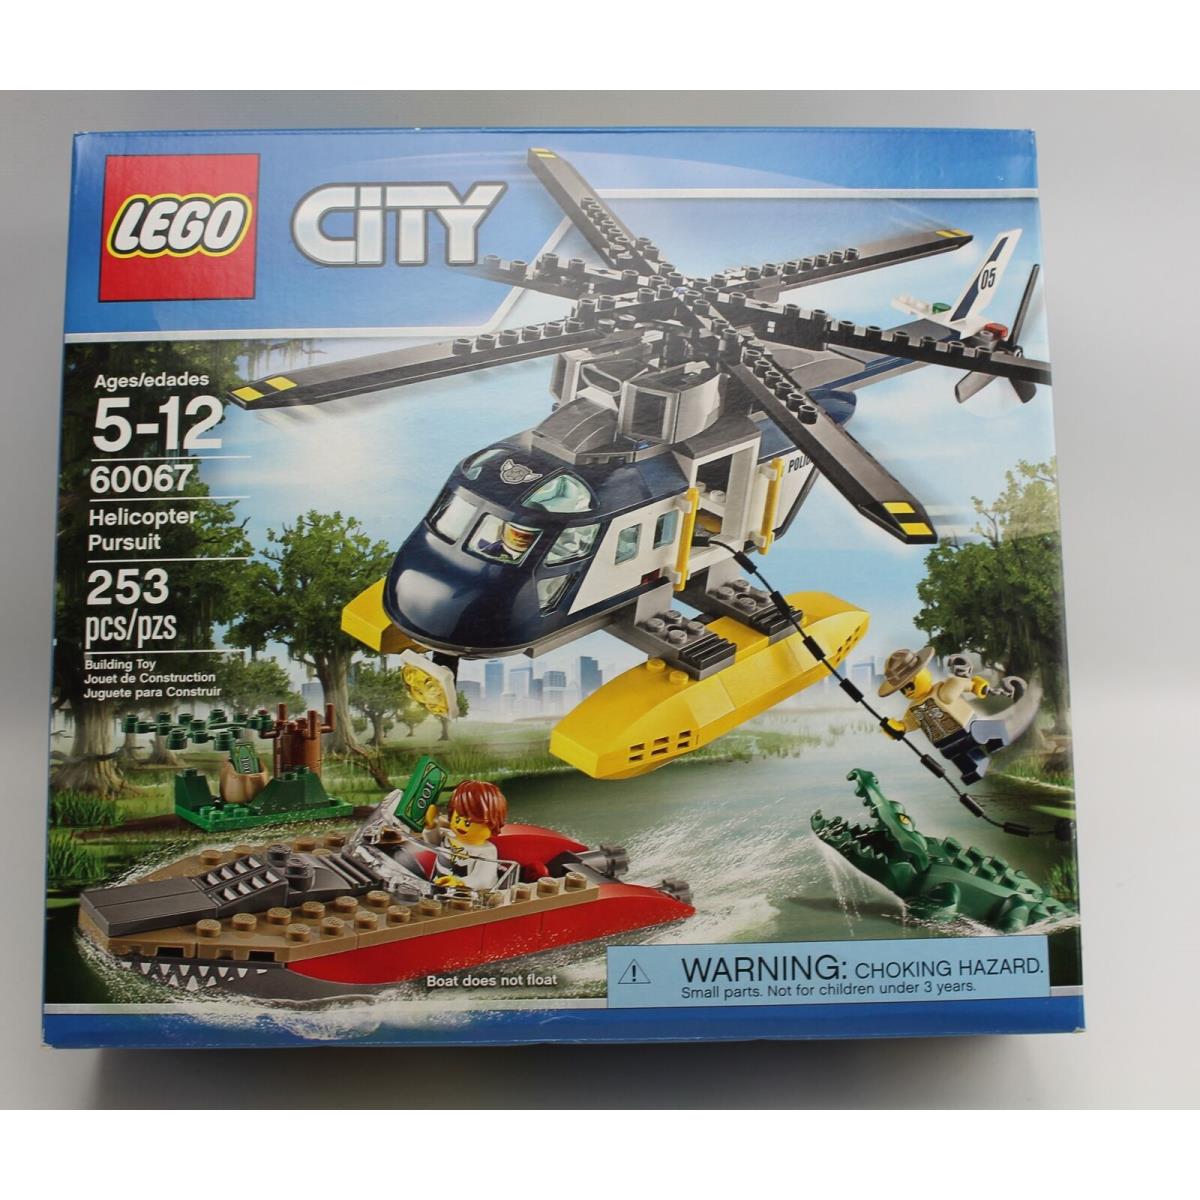 Lego City Helicopter Pursuit Set 60067